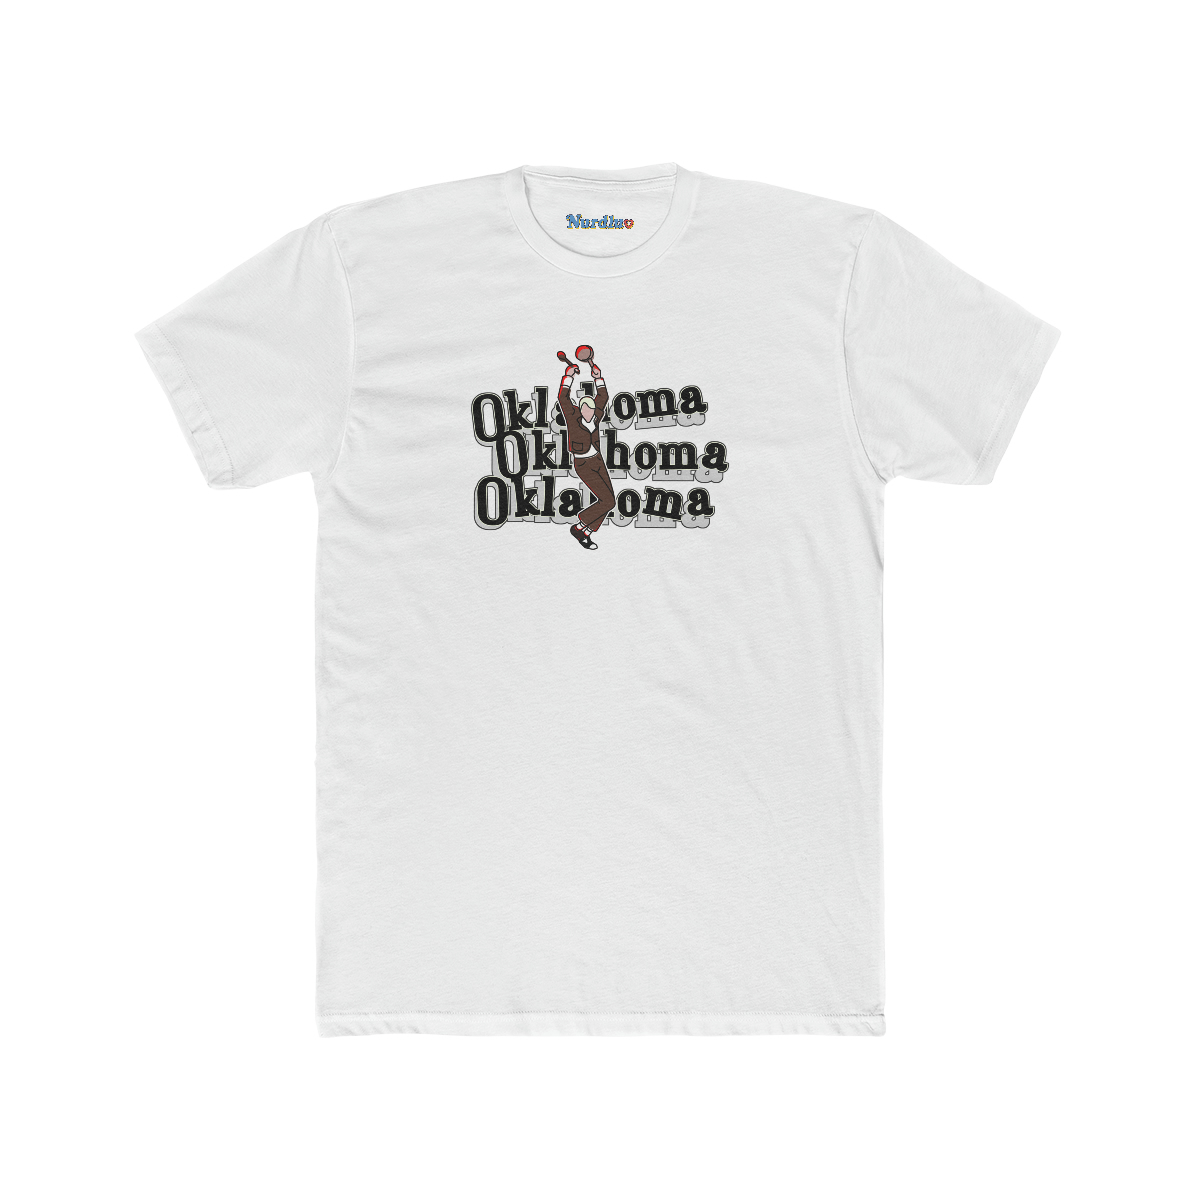 Oklahoma! (light shirts) - Men's Cotton Crew Tee